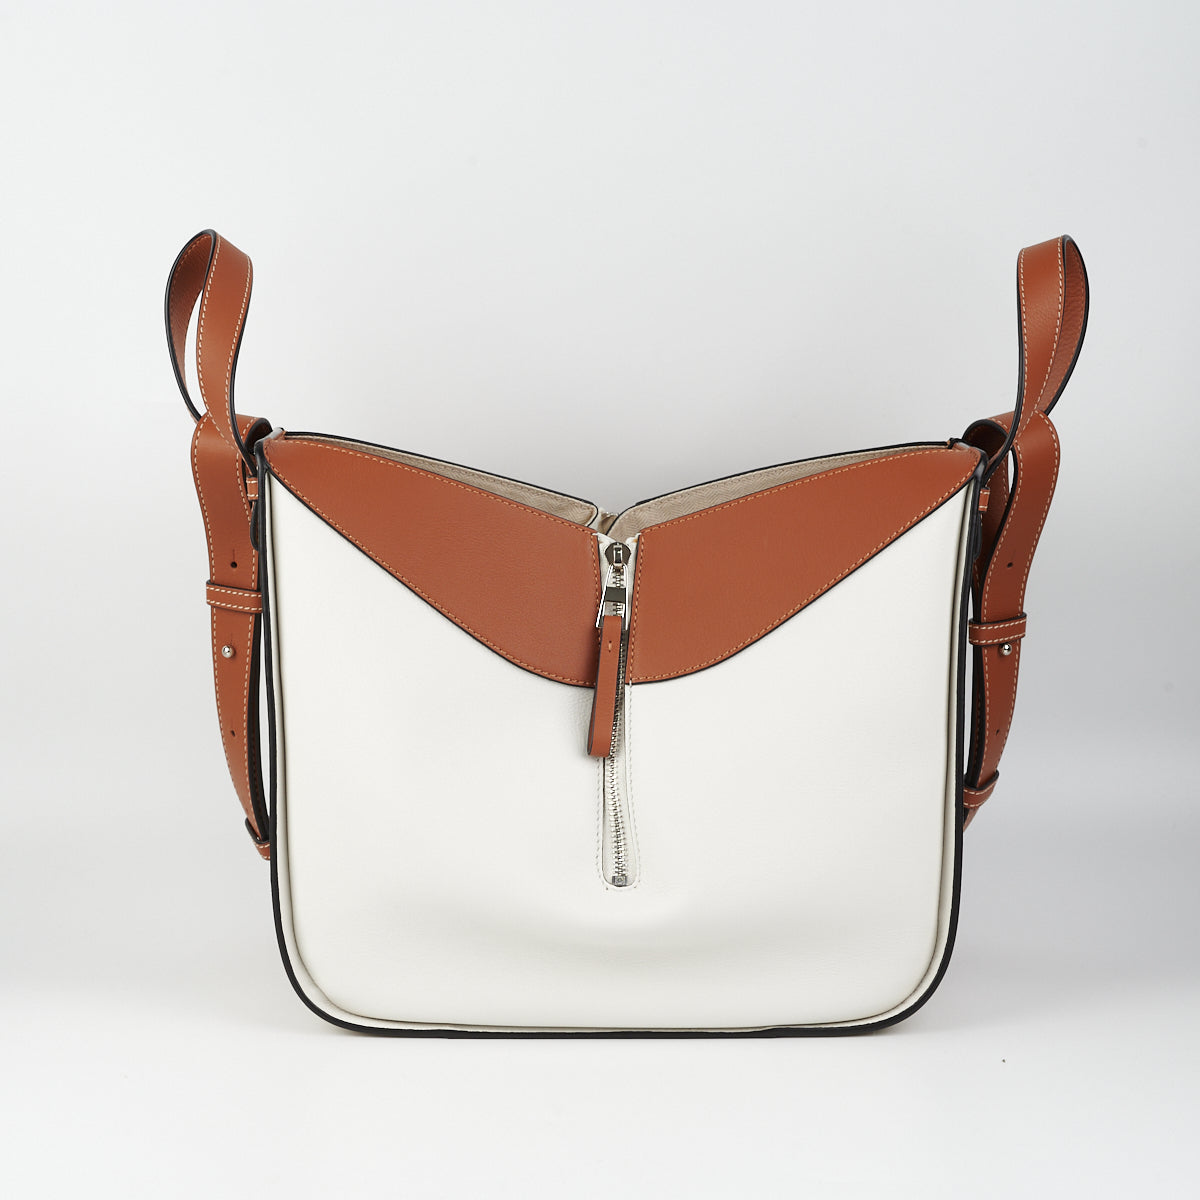 Introducing: Loewe's 'Hammock' Bag - BagAddicts Anonymous